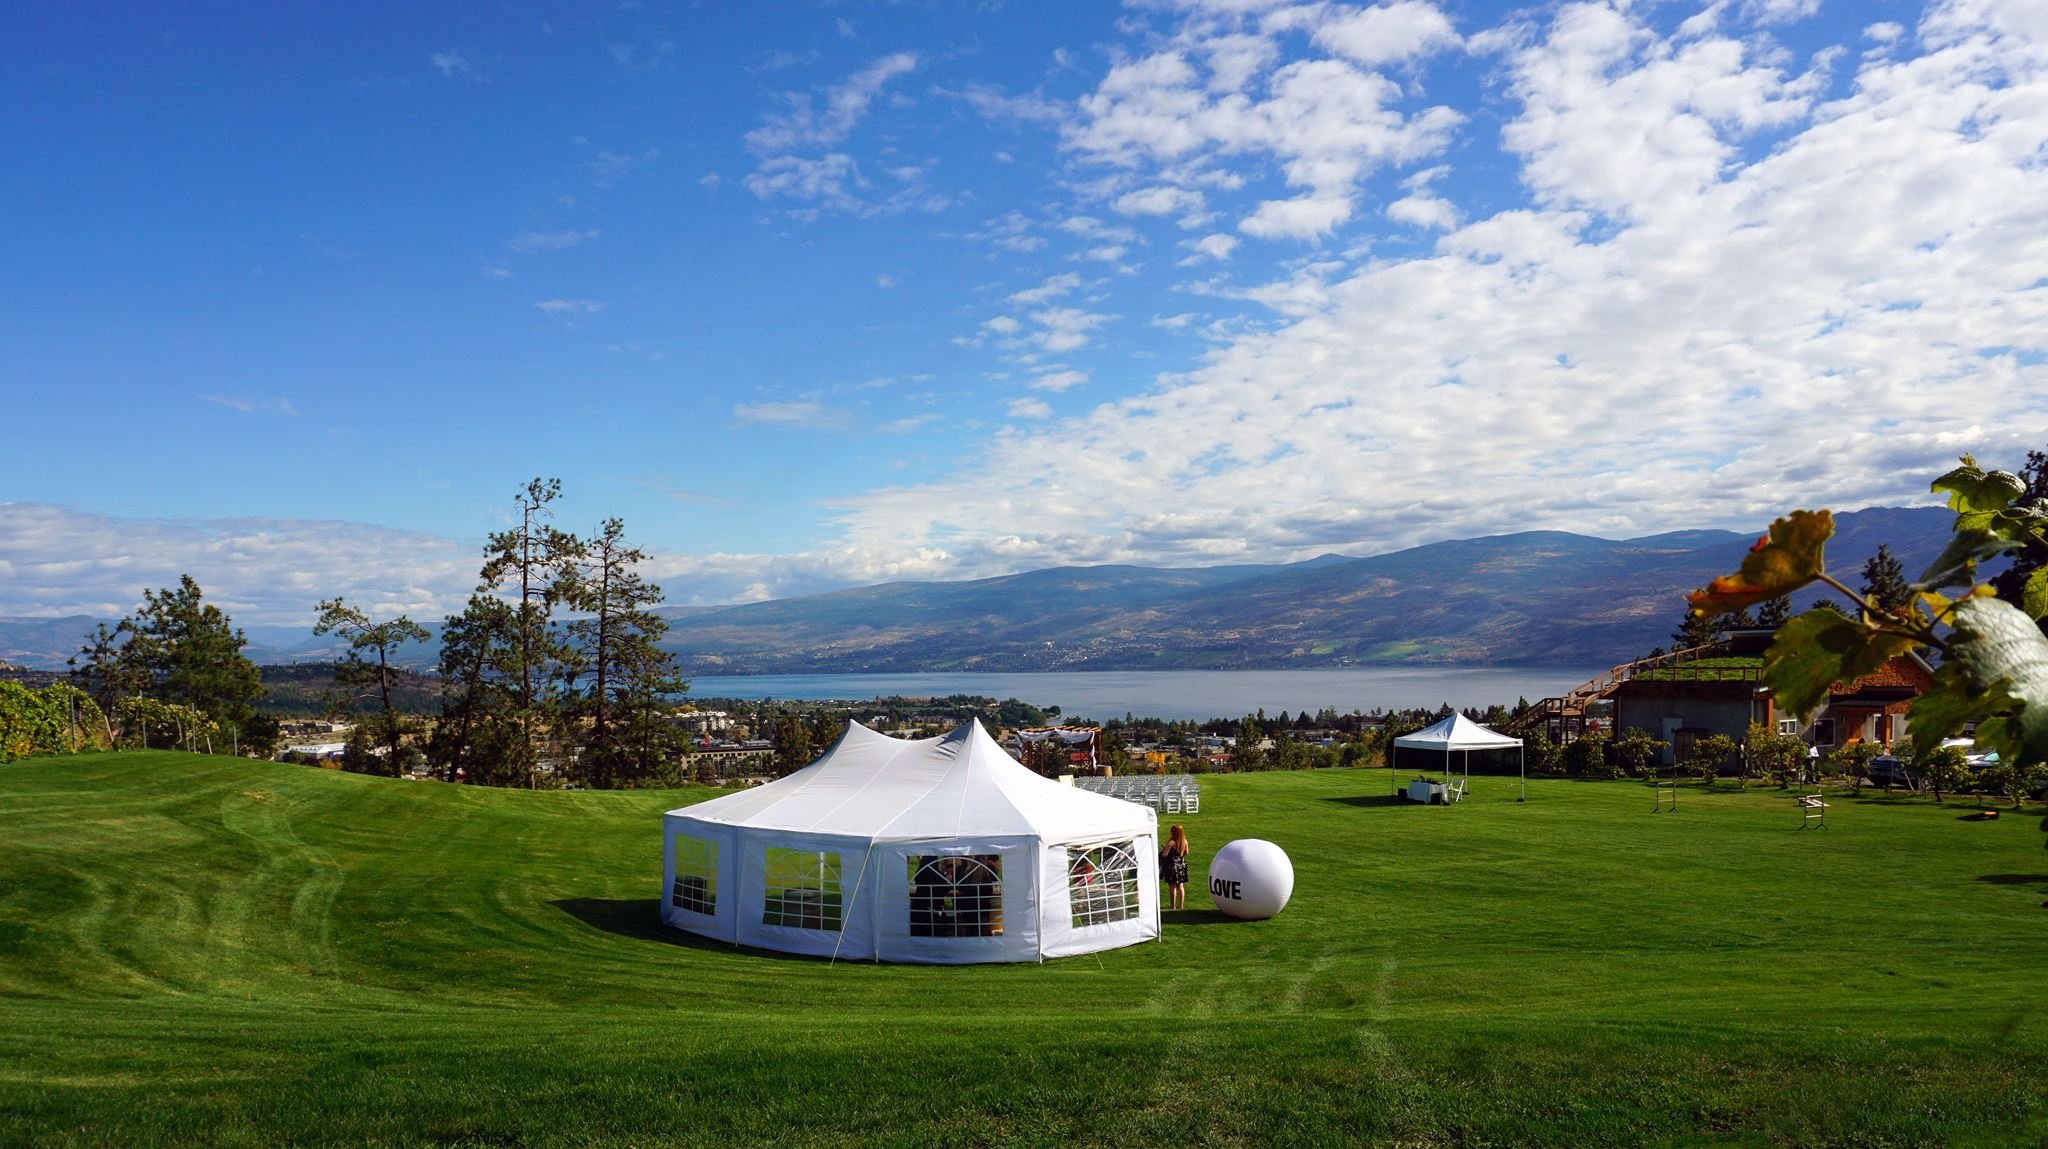 Wedding gardens with tent - otg.jpg